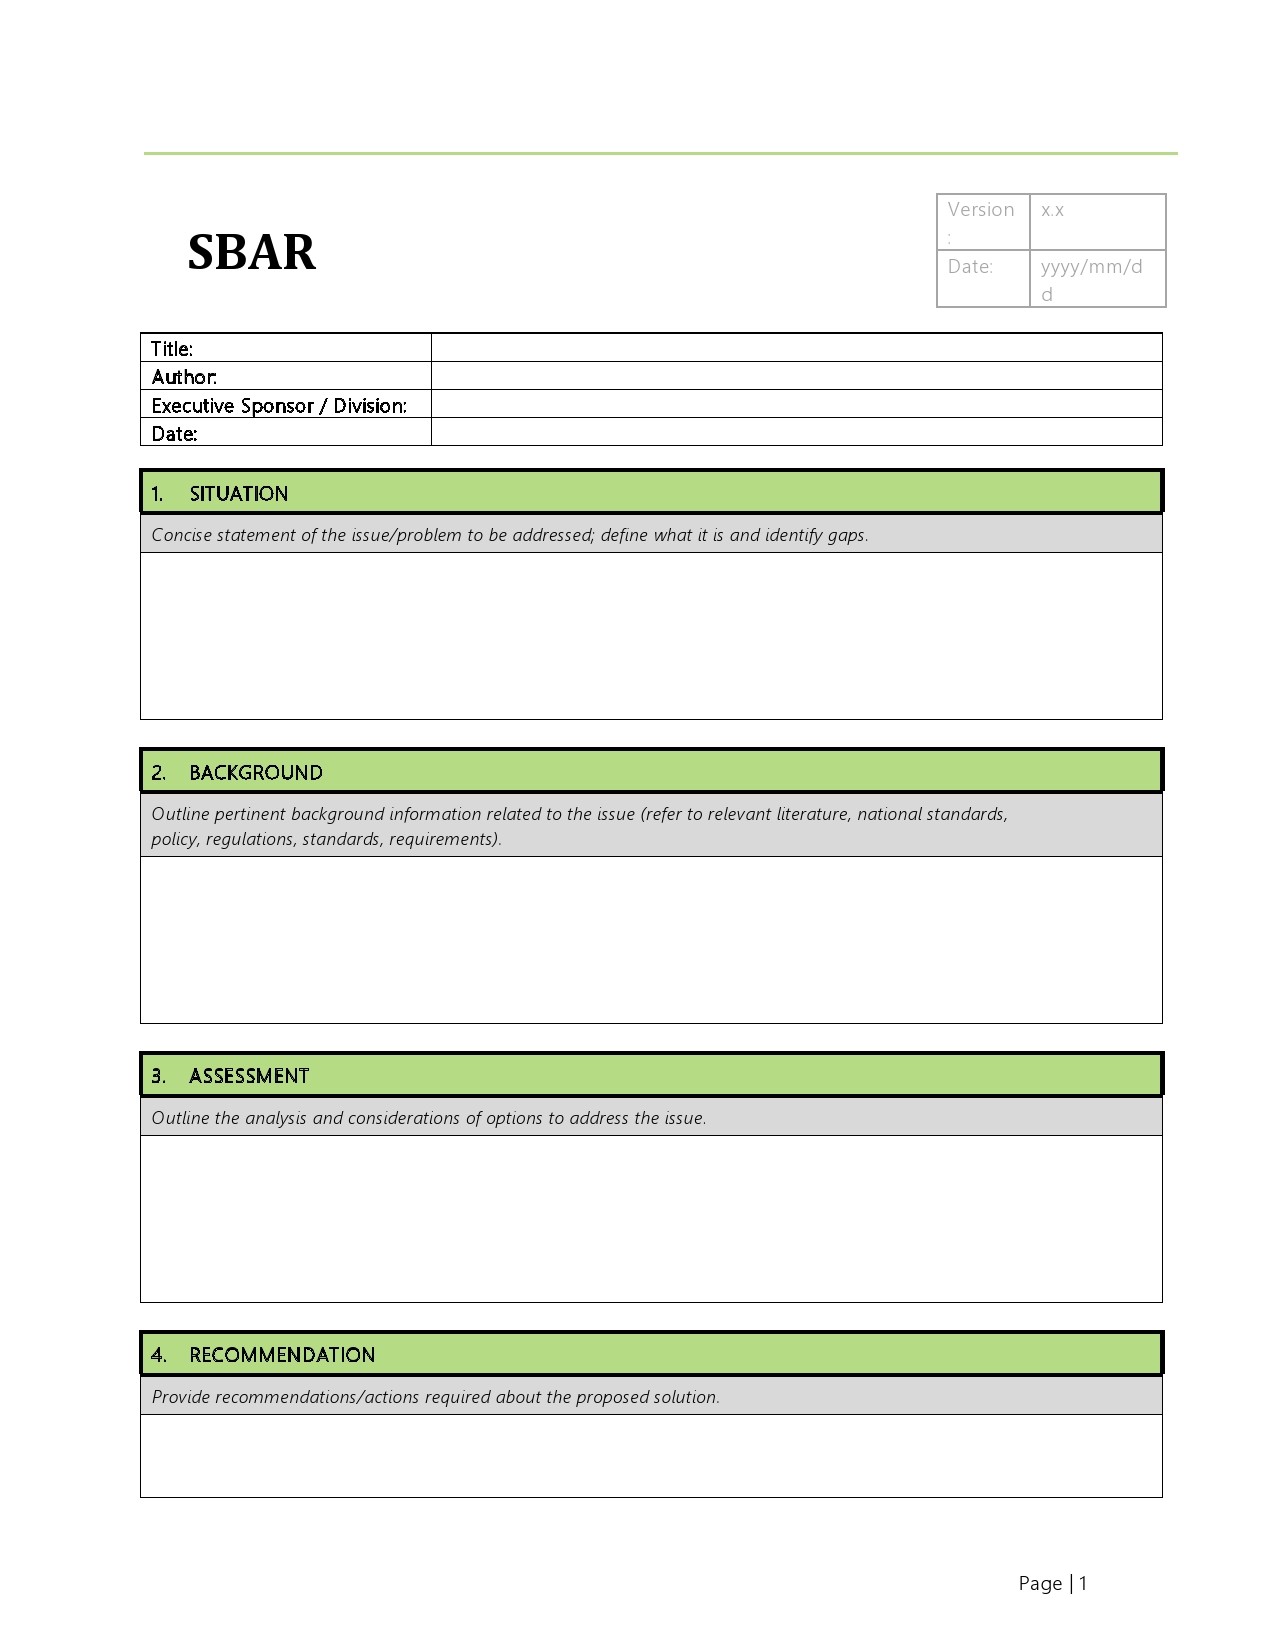 40 Blank SBAR Templates (Word, PDF) ᐅ TemplateLab